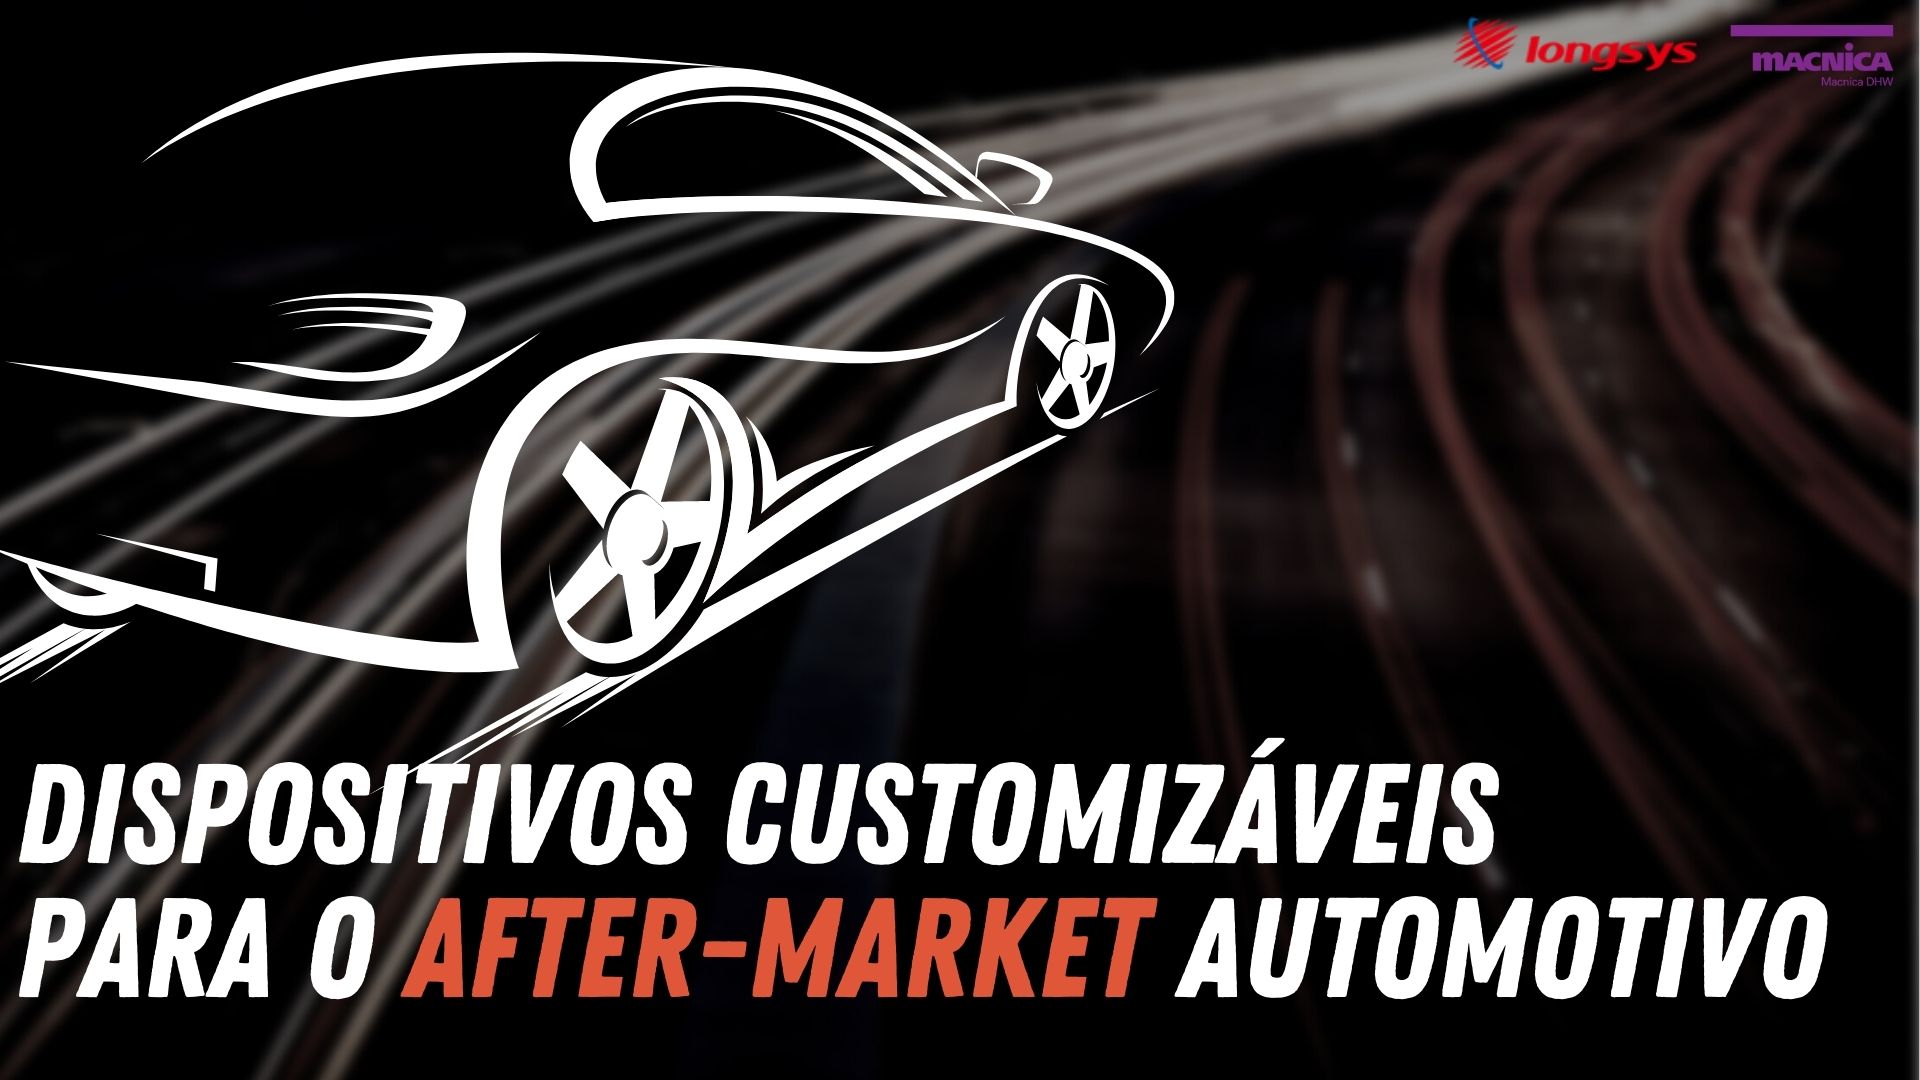 You are currently viewing Dispositivos para o after-market automotivo